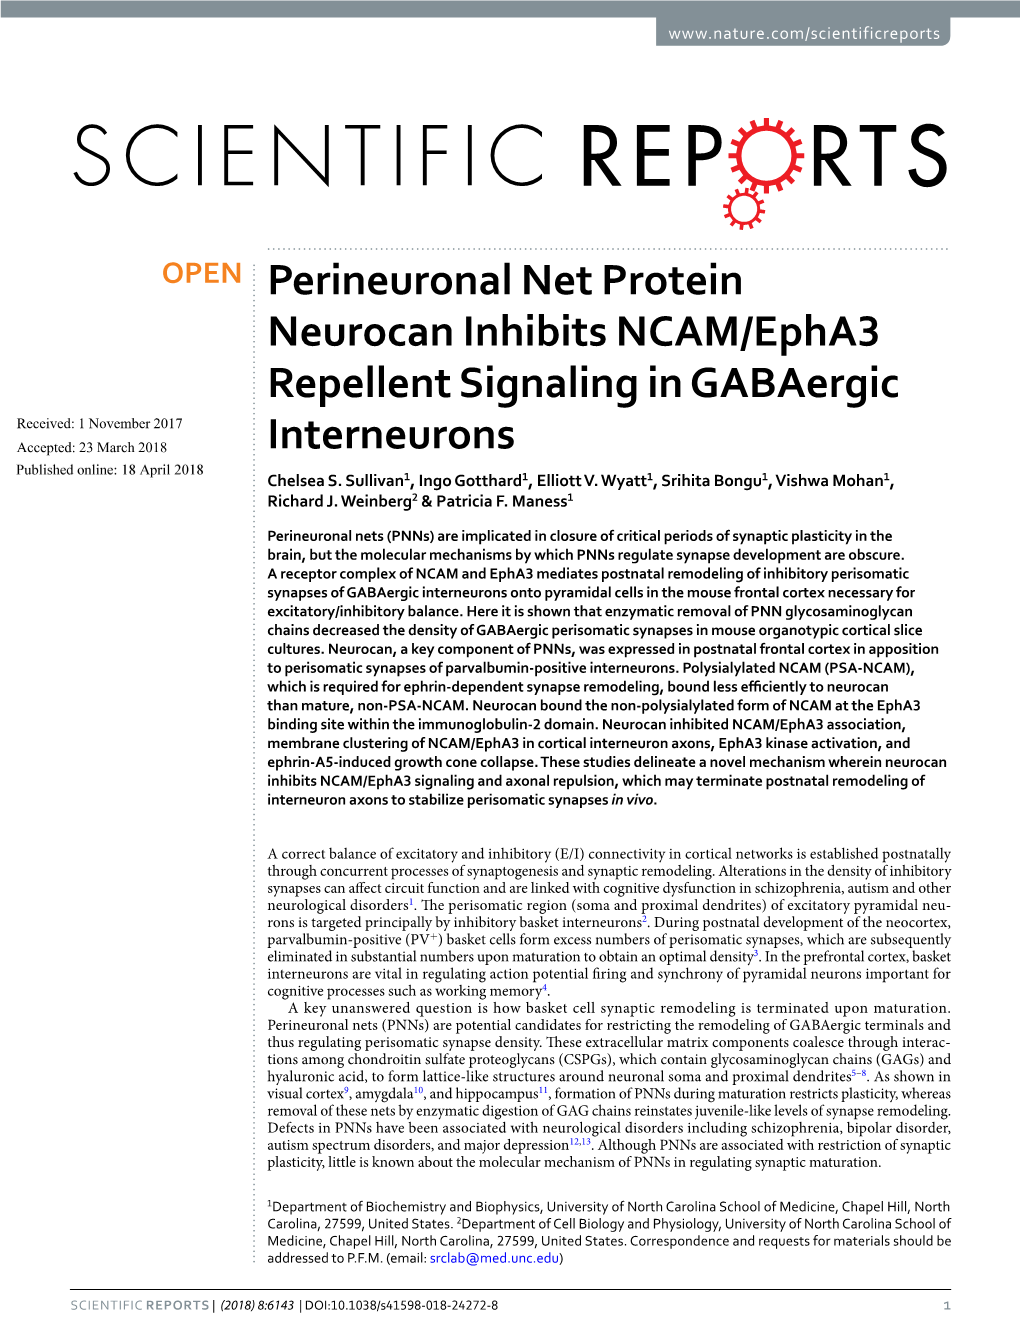 Perineuronal Net Protein Neurocan Inhibits NCAM/Epha3 Repellent